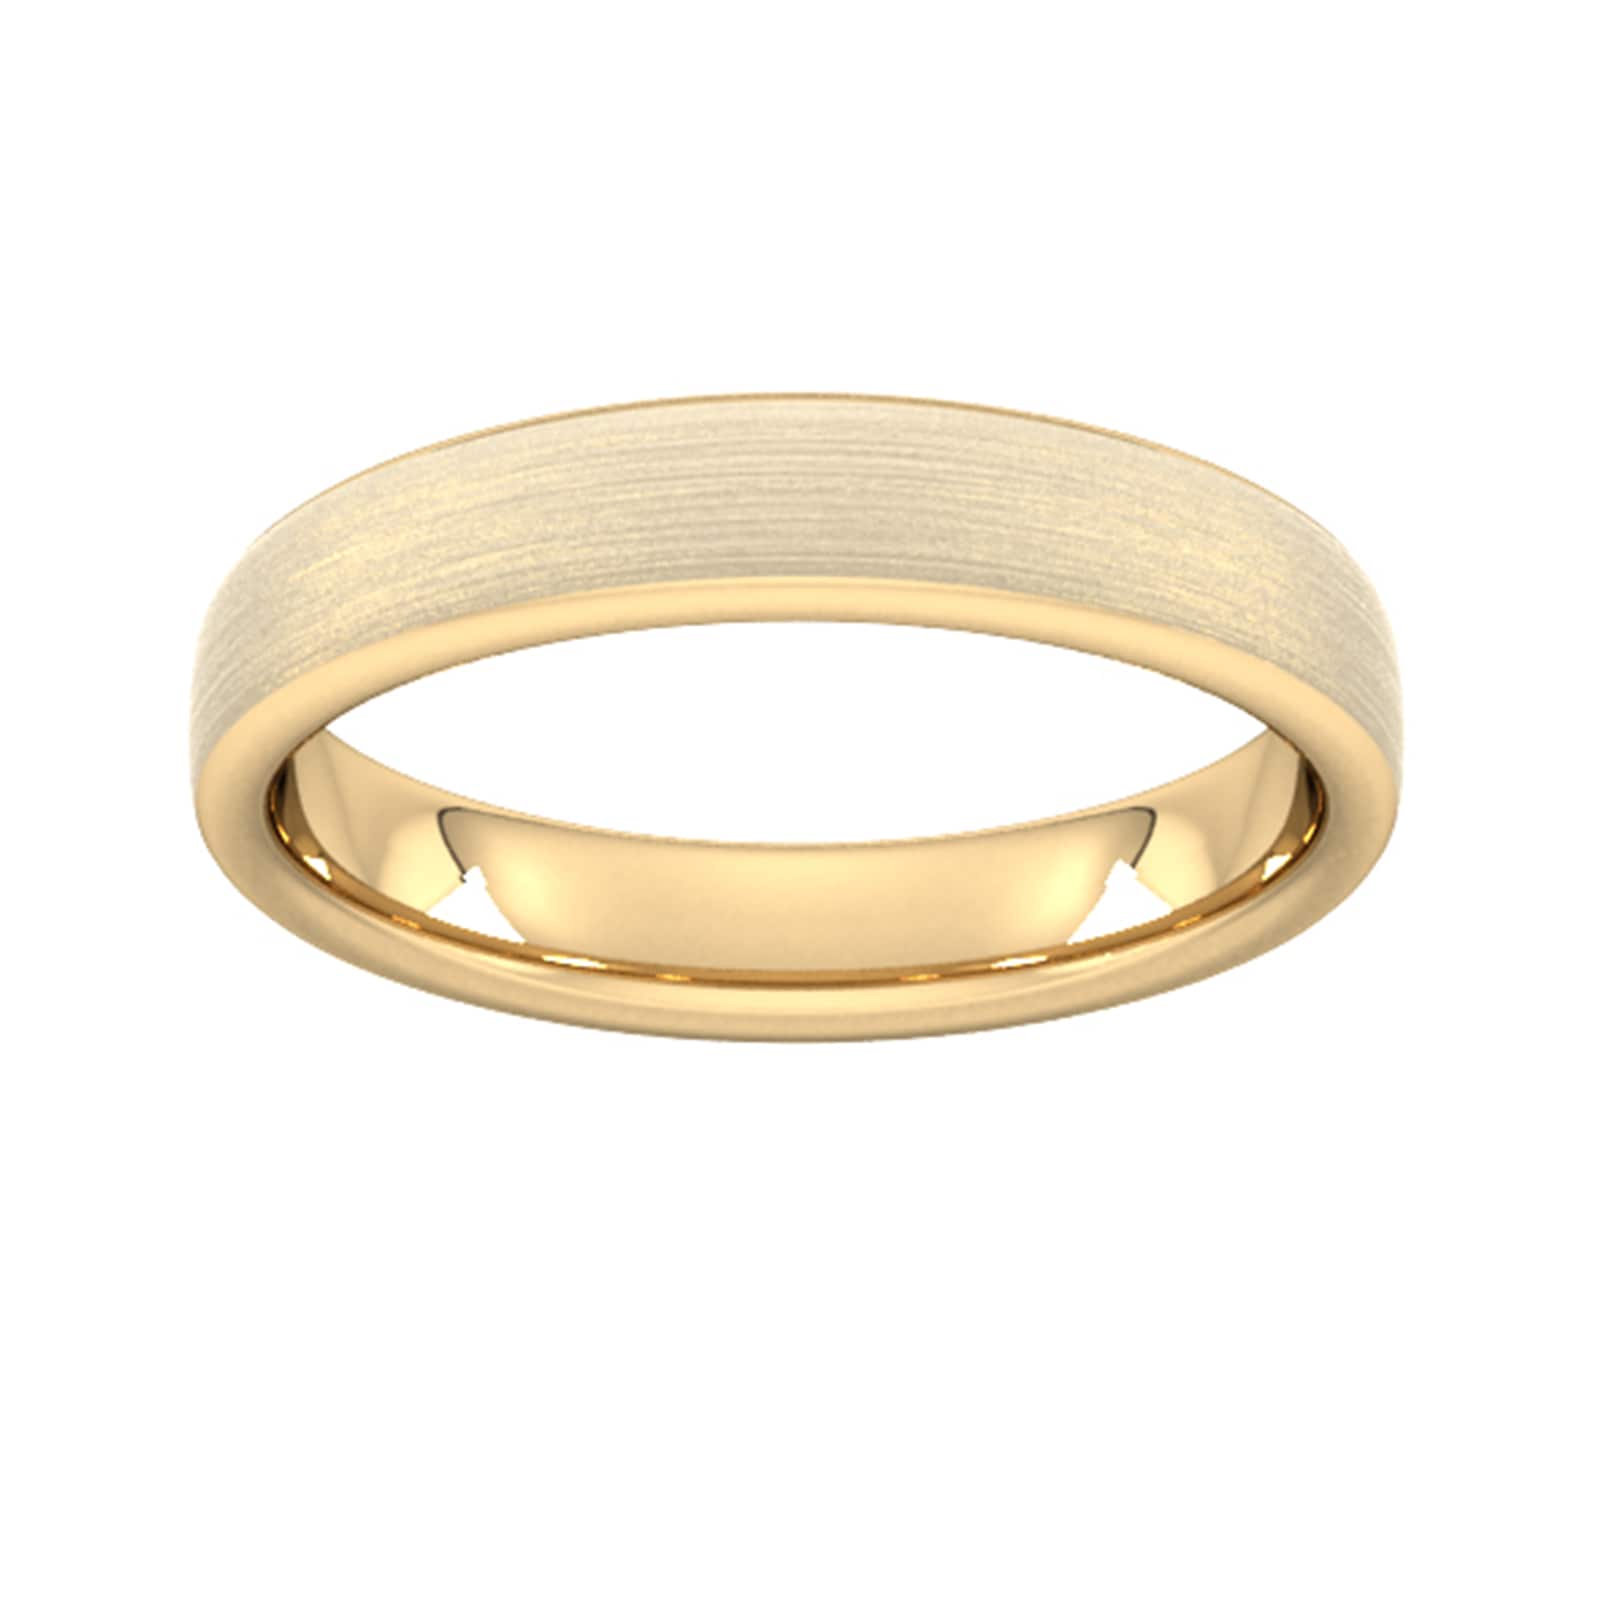 4mm Slight Court Heavy Matt Finished Wedding Ring In 9 Carat Yellow Gold - Ring Size G